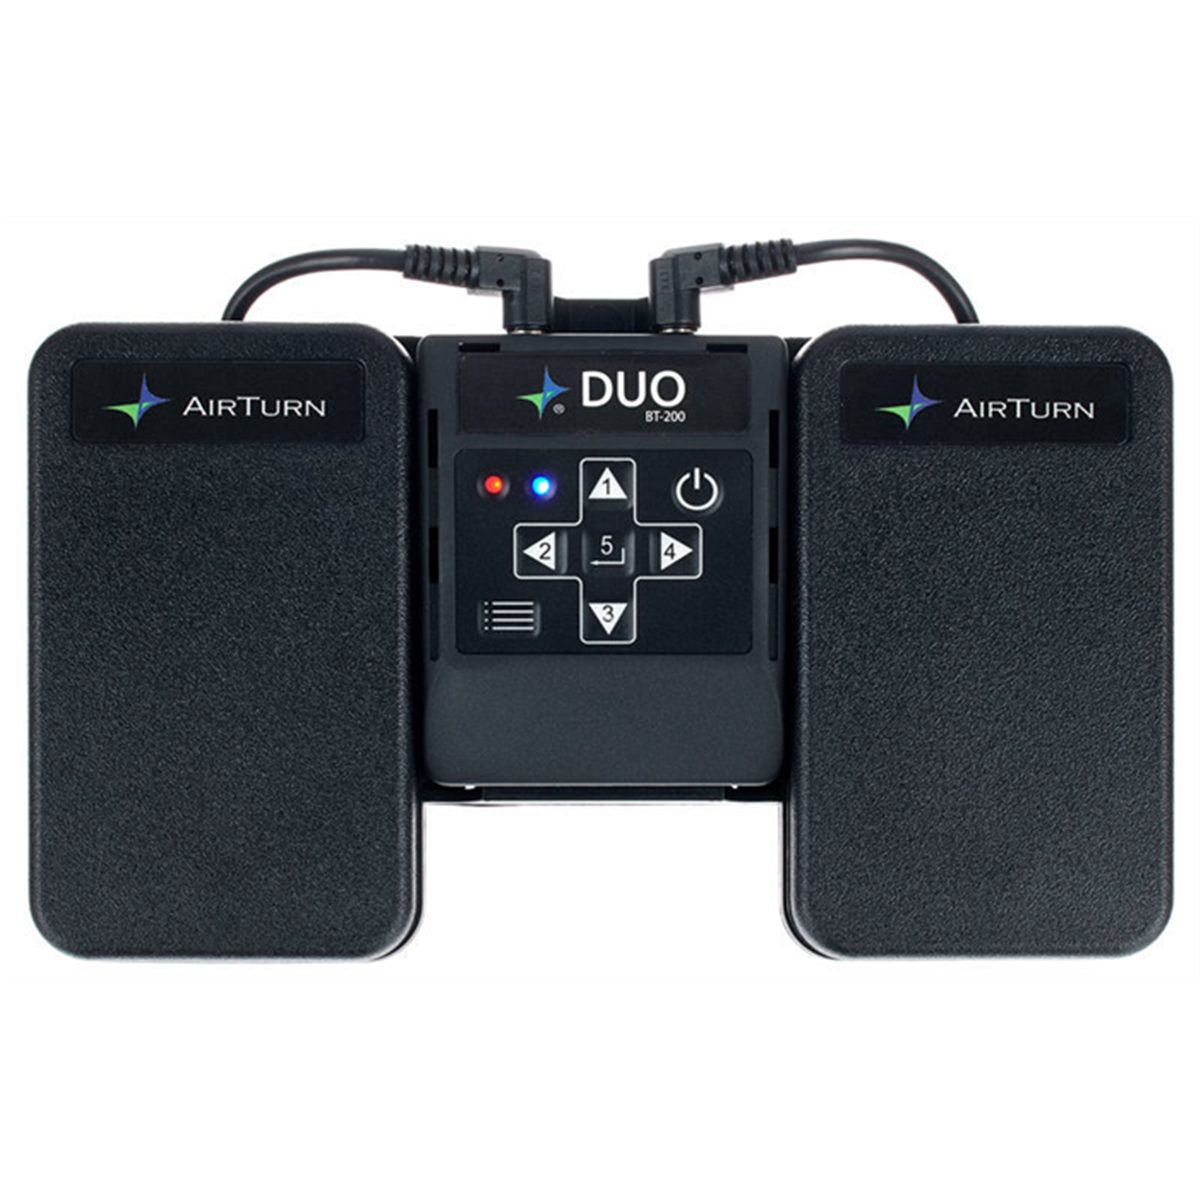 AIRTURN Duo 200 Pédale Tourne Page Bluetooth